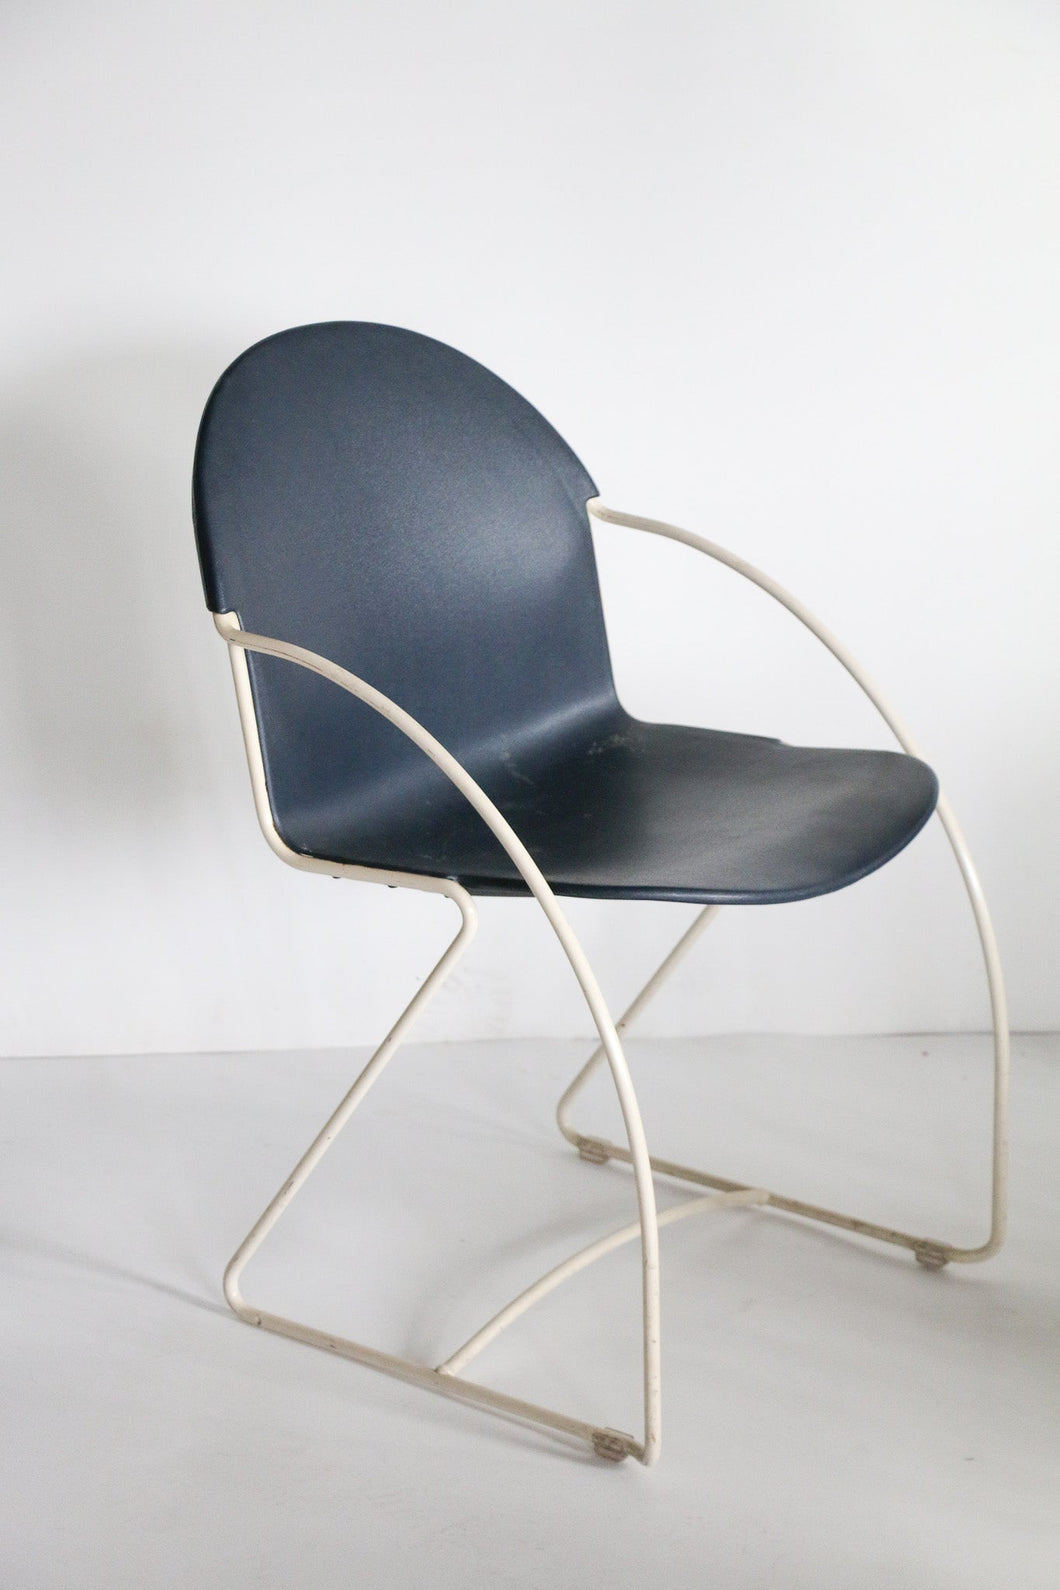 Mid Century Modern Chair by Steelcase